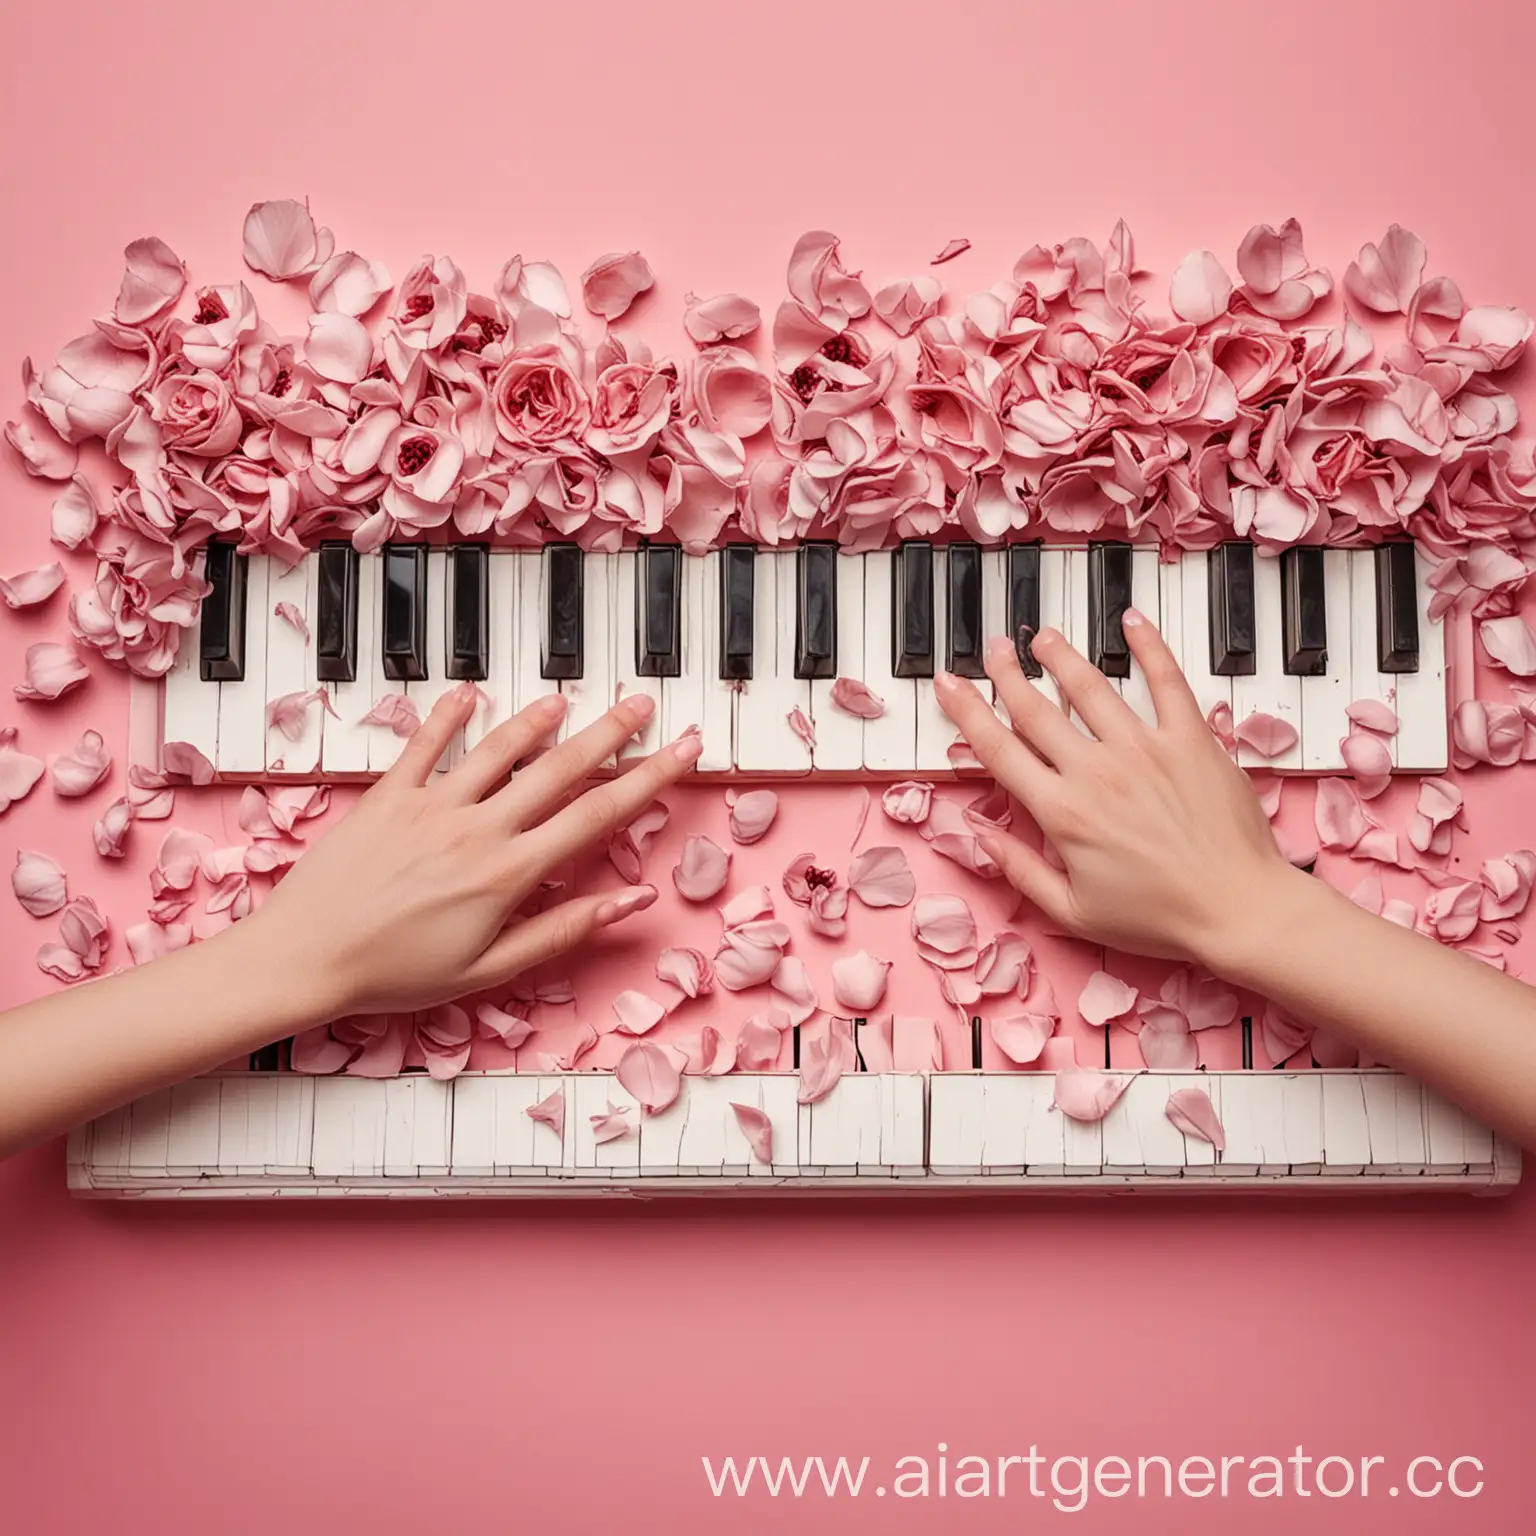 клафиши фортепиано с руками на них на розовом фоне с лепестками